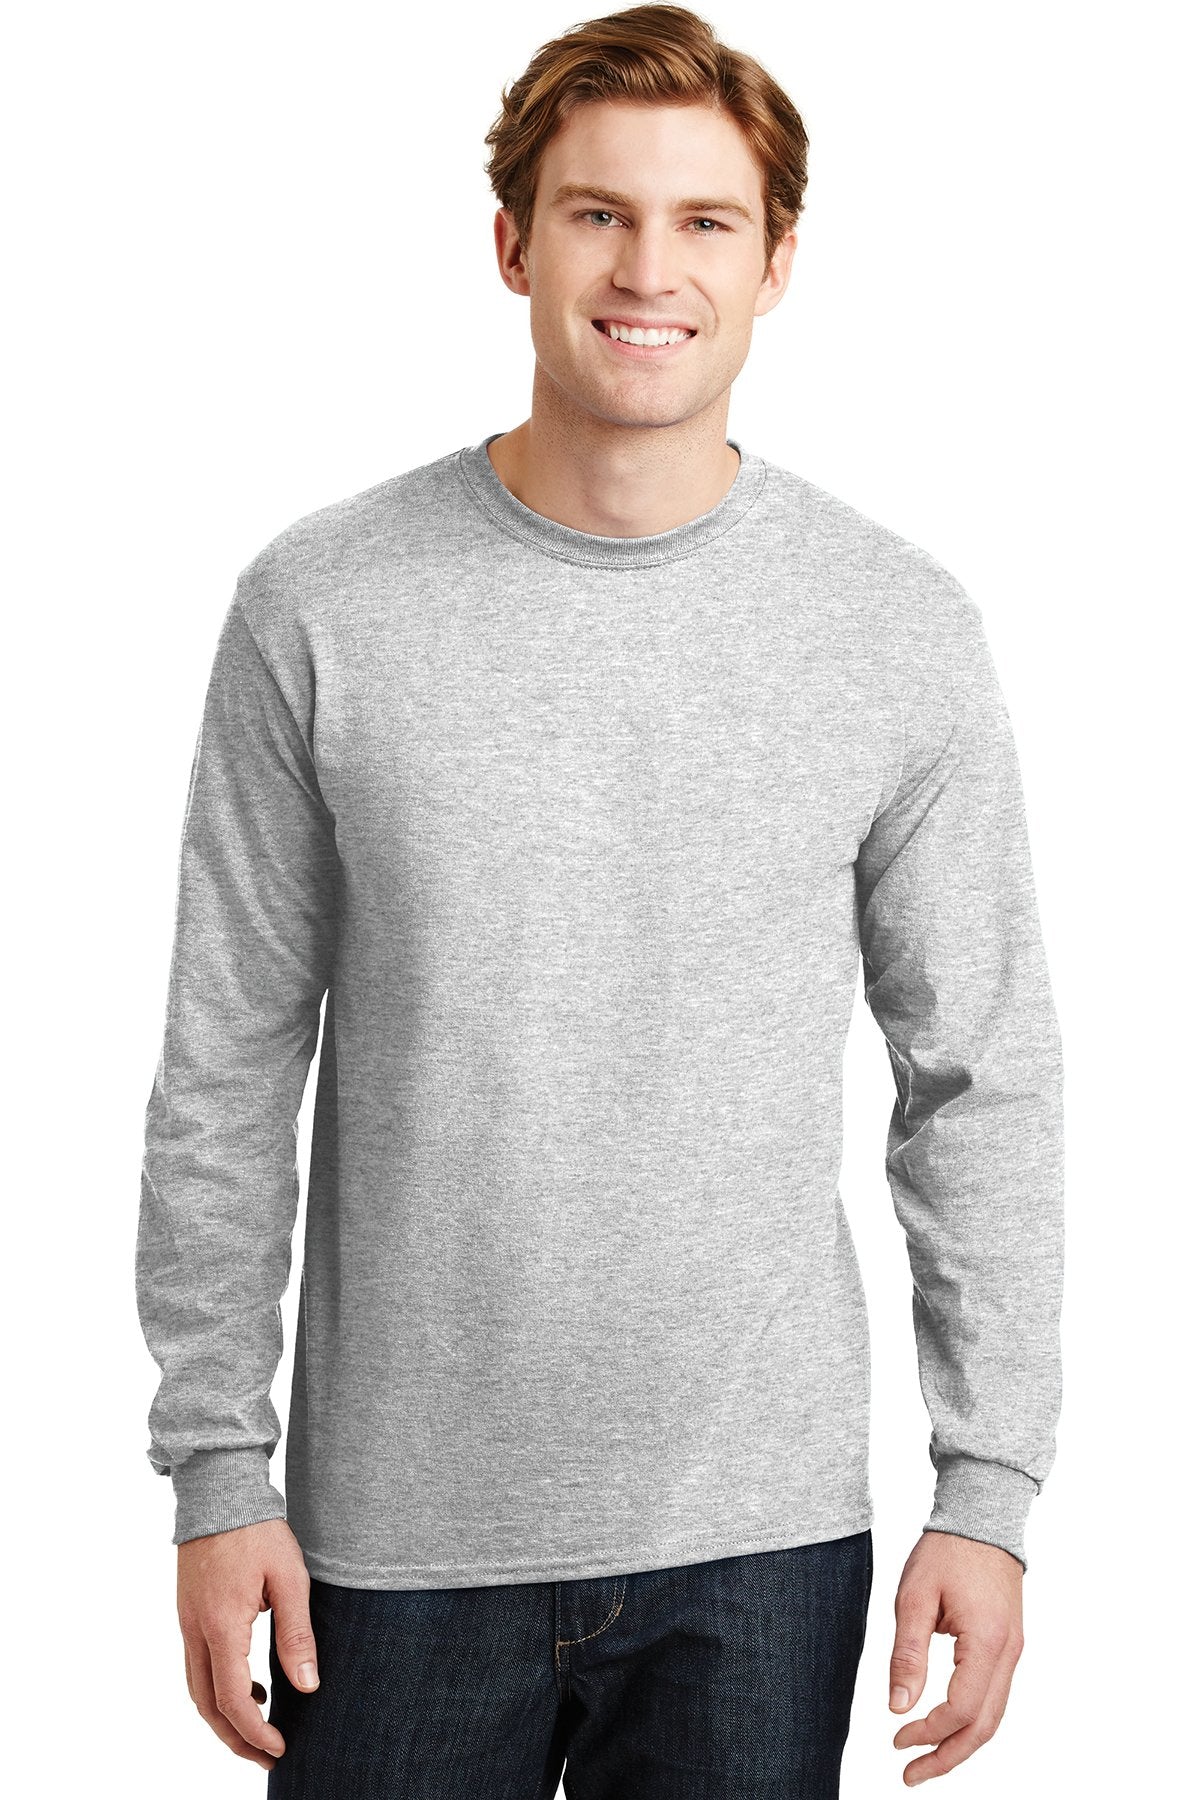 Branded Gildan Dryblend Cotton Poly Long Sleeve T Shirt 8400 Ash Grey